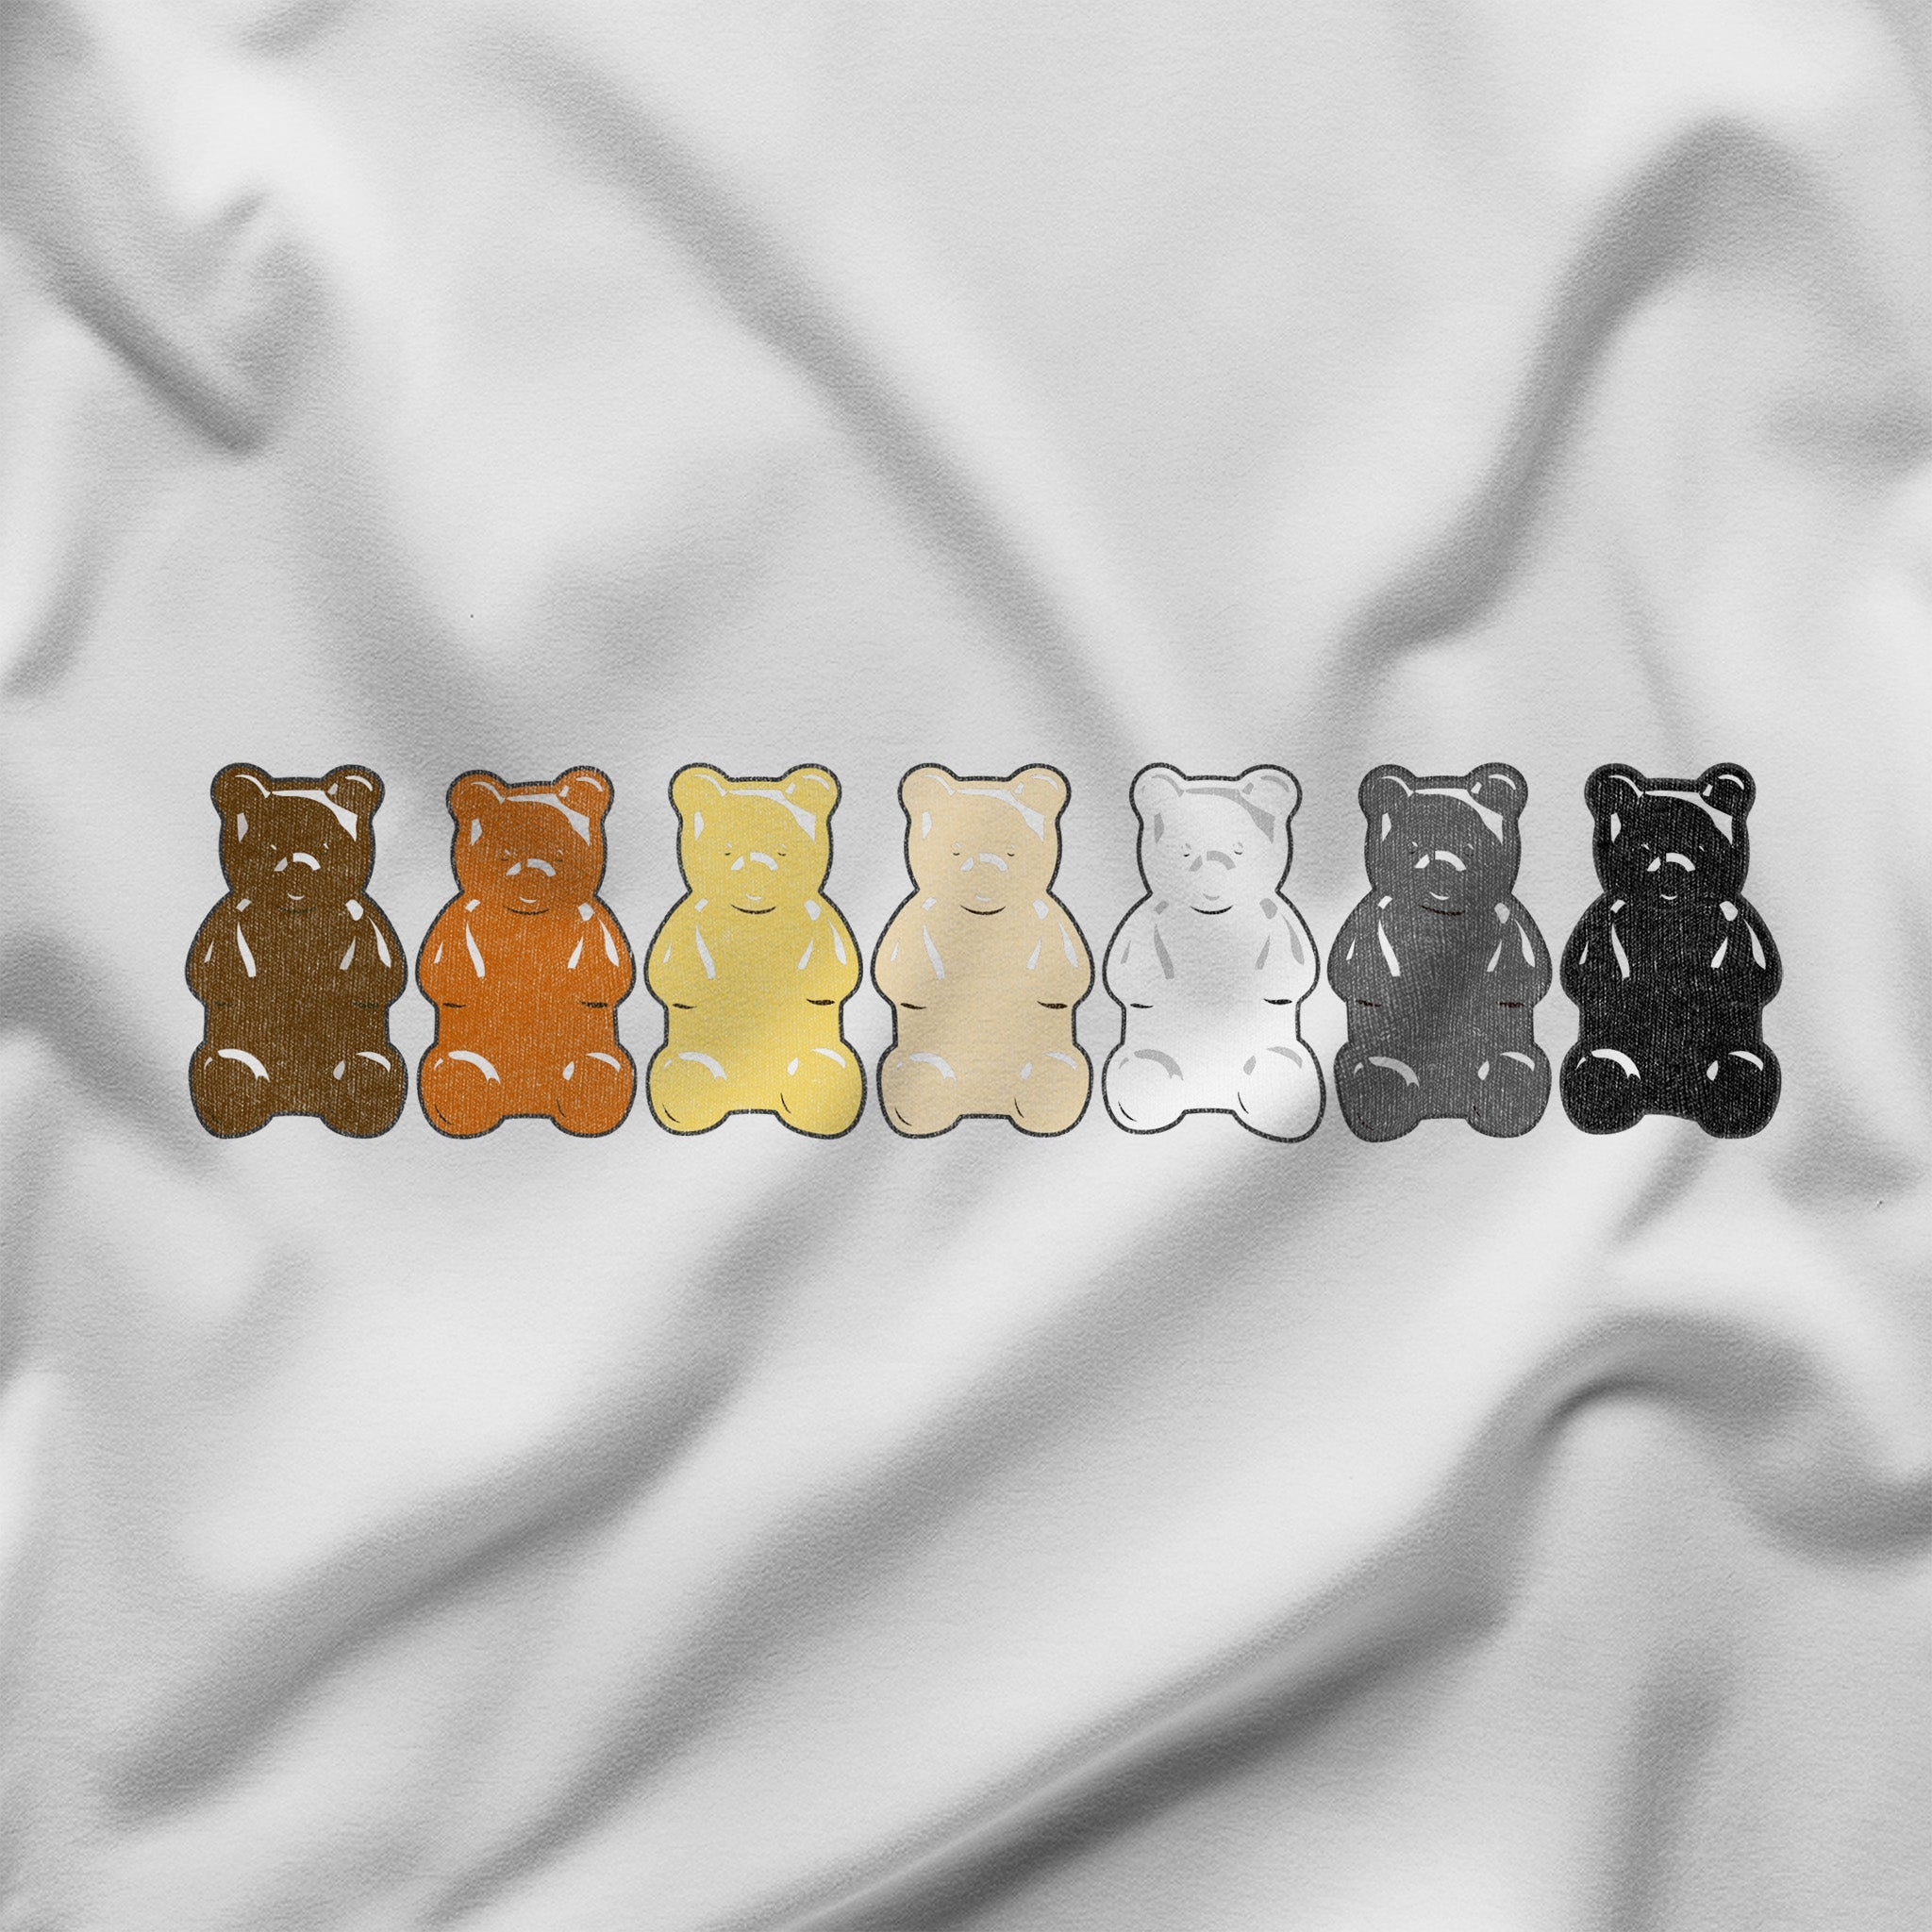 "Gummy Bears Unite!" Gay Bear Pride T-Shirt - Hunky Tops#color_white